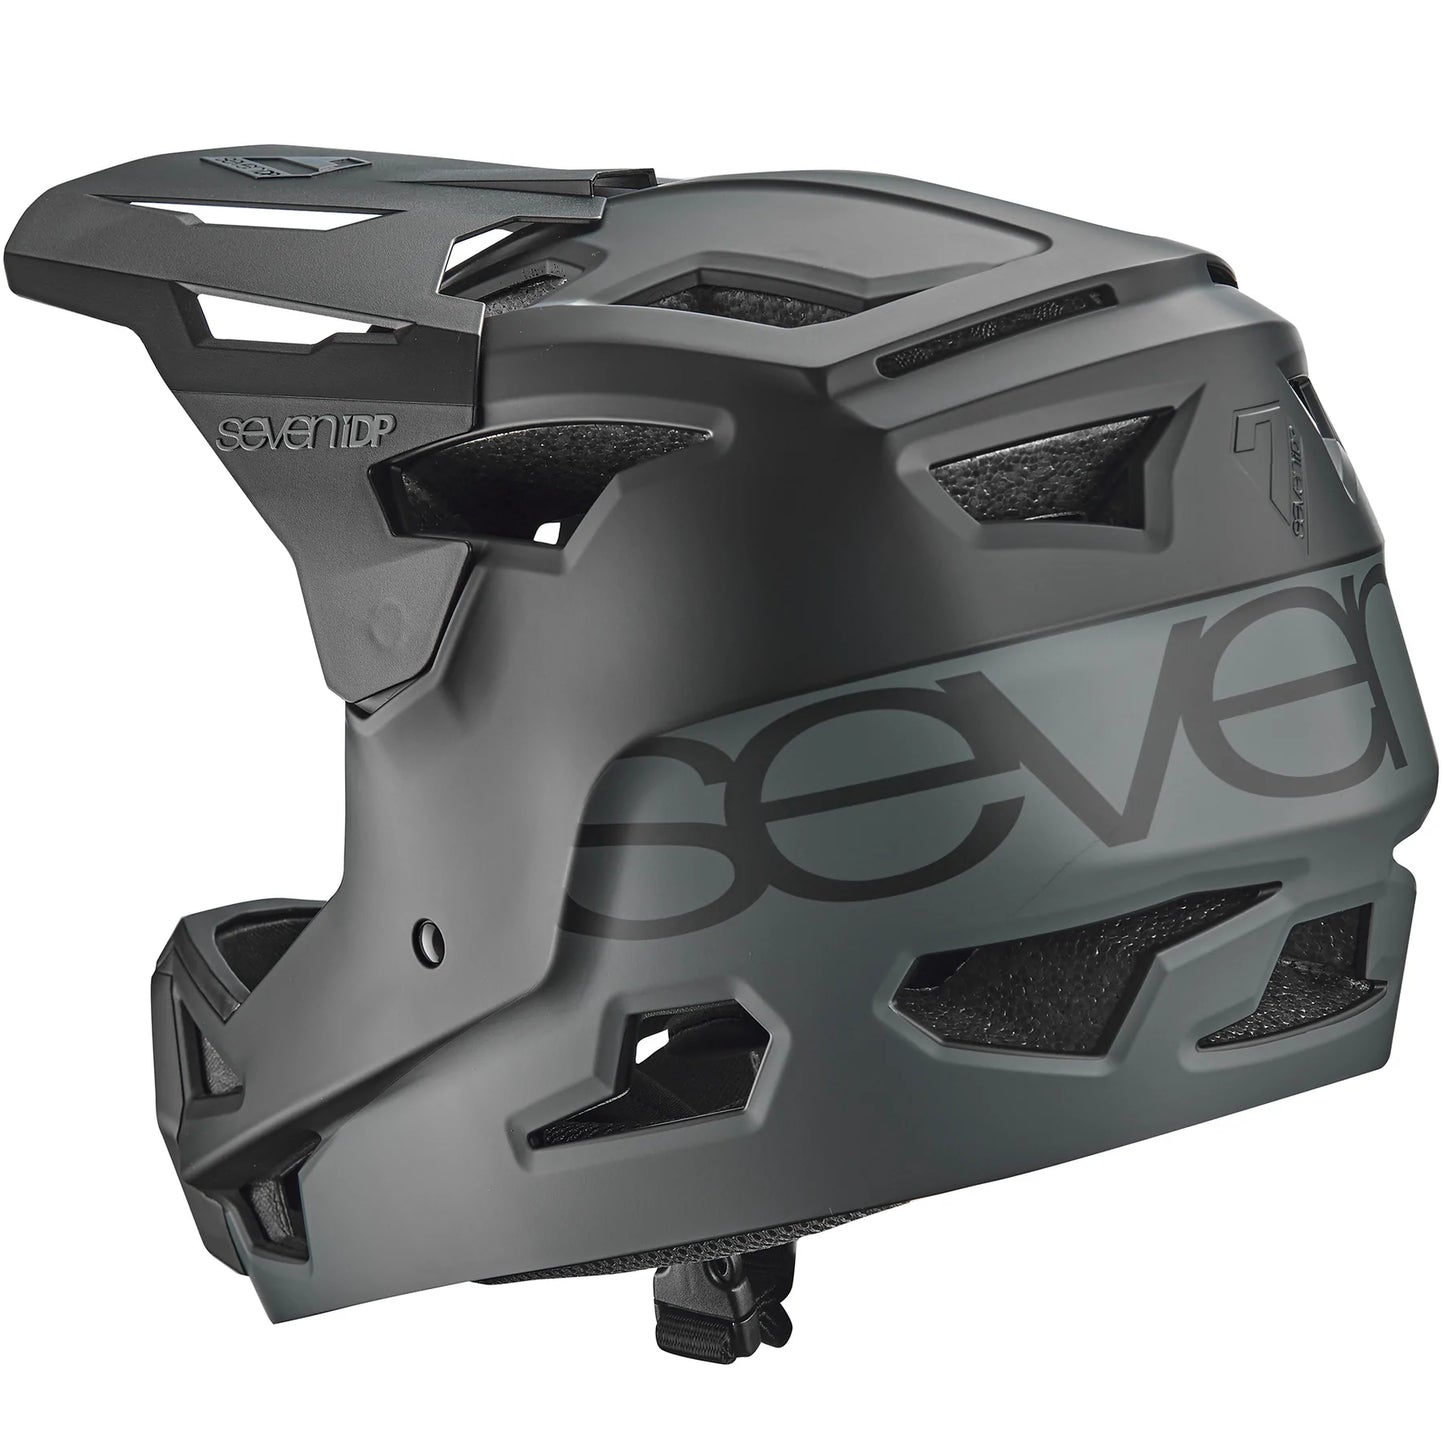 7 iDP Project 23 ABS Full Face Helmet - Graphite-Black